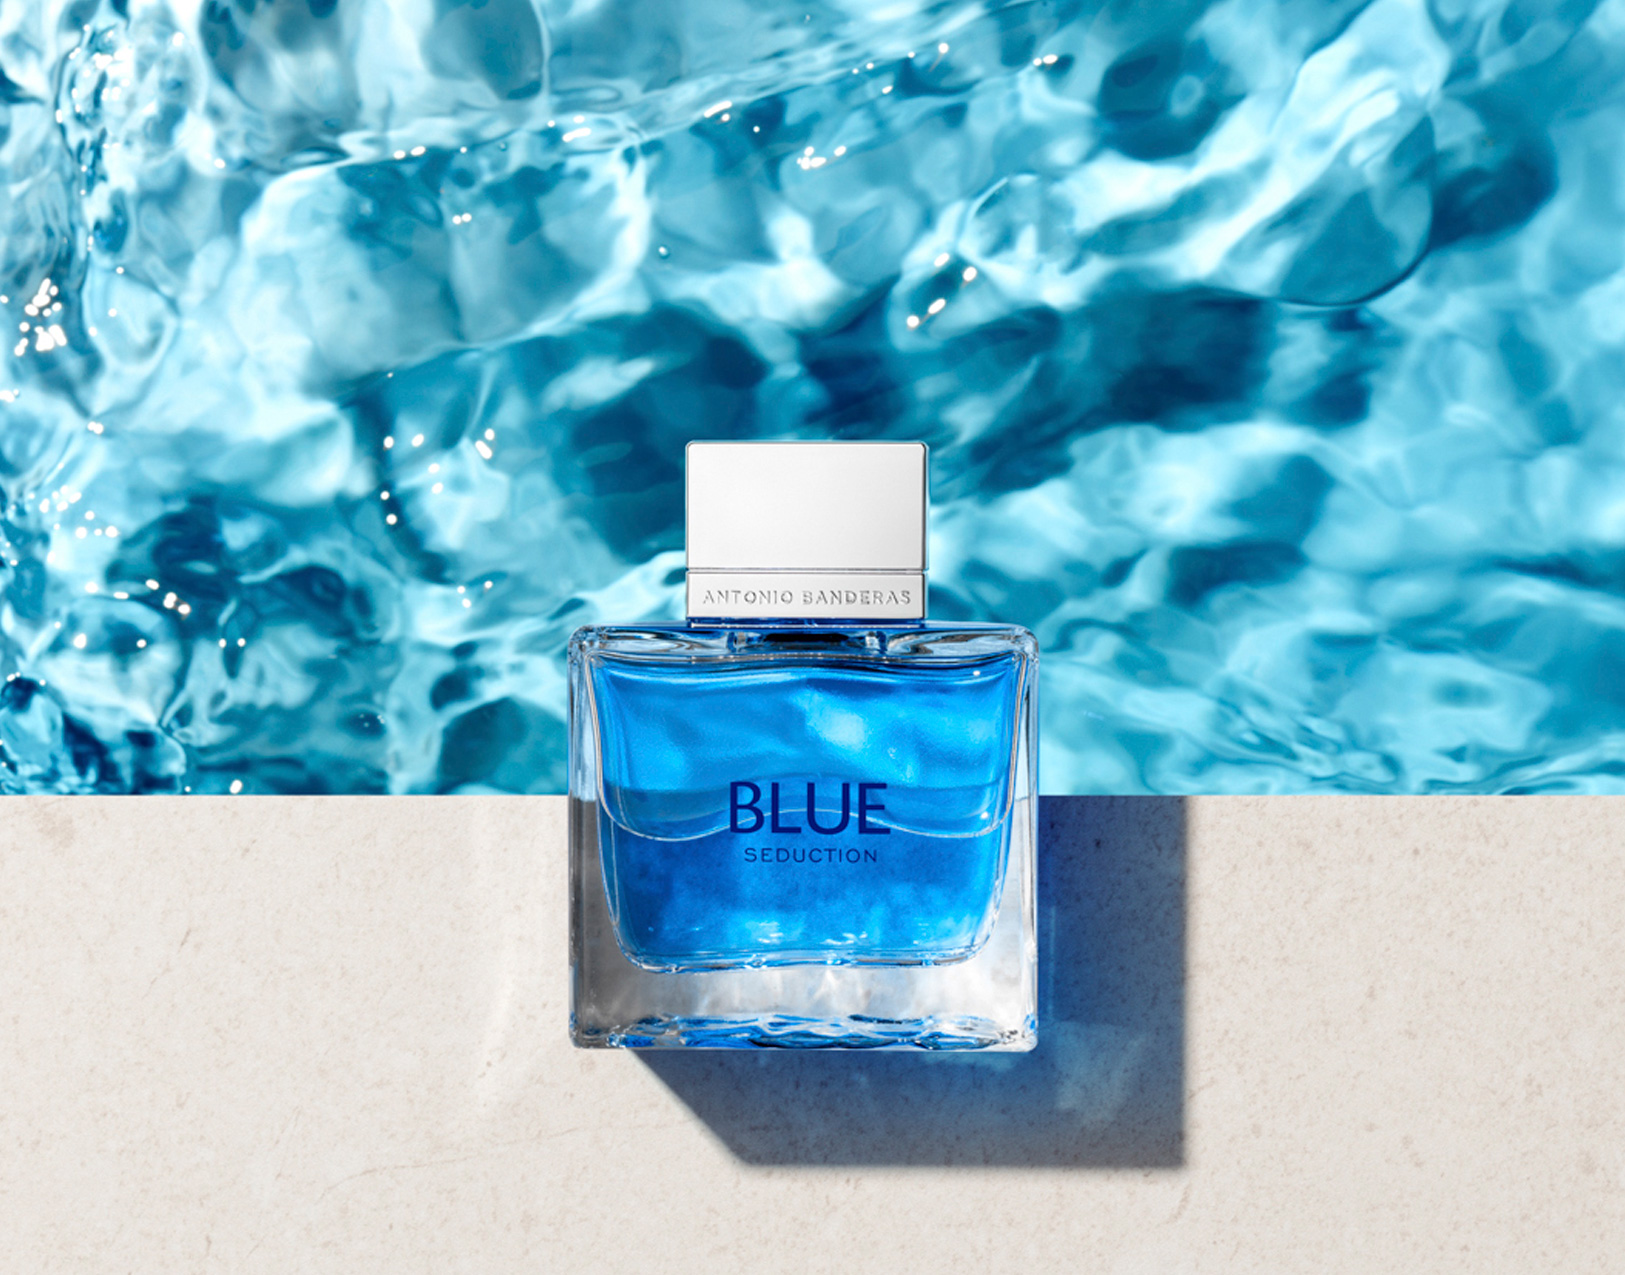 https://www.banderasperfumes.com/uploads/products/images/seduction-blue-head_1678534868.jpg